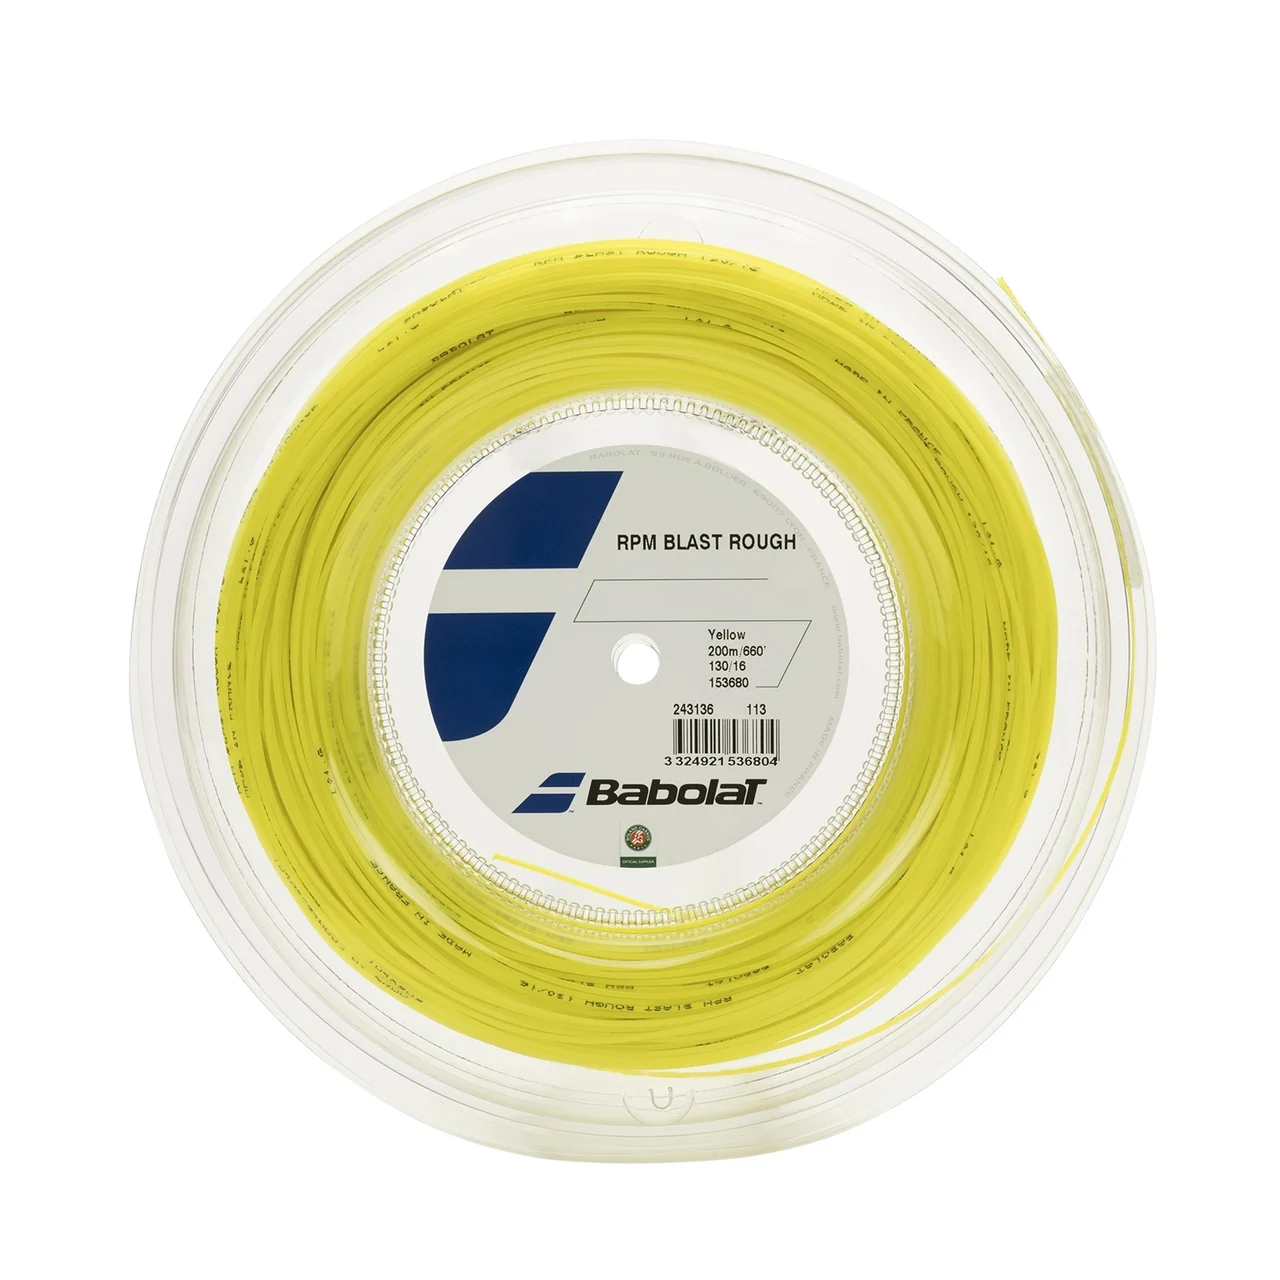 Babolat RPM Blast Rough Yellow 200 m